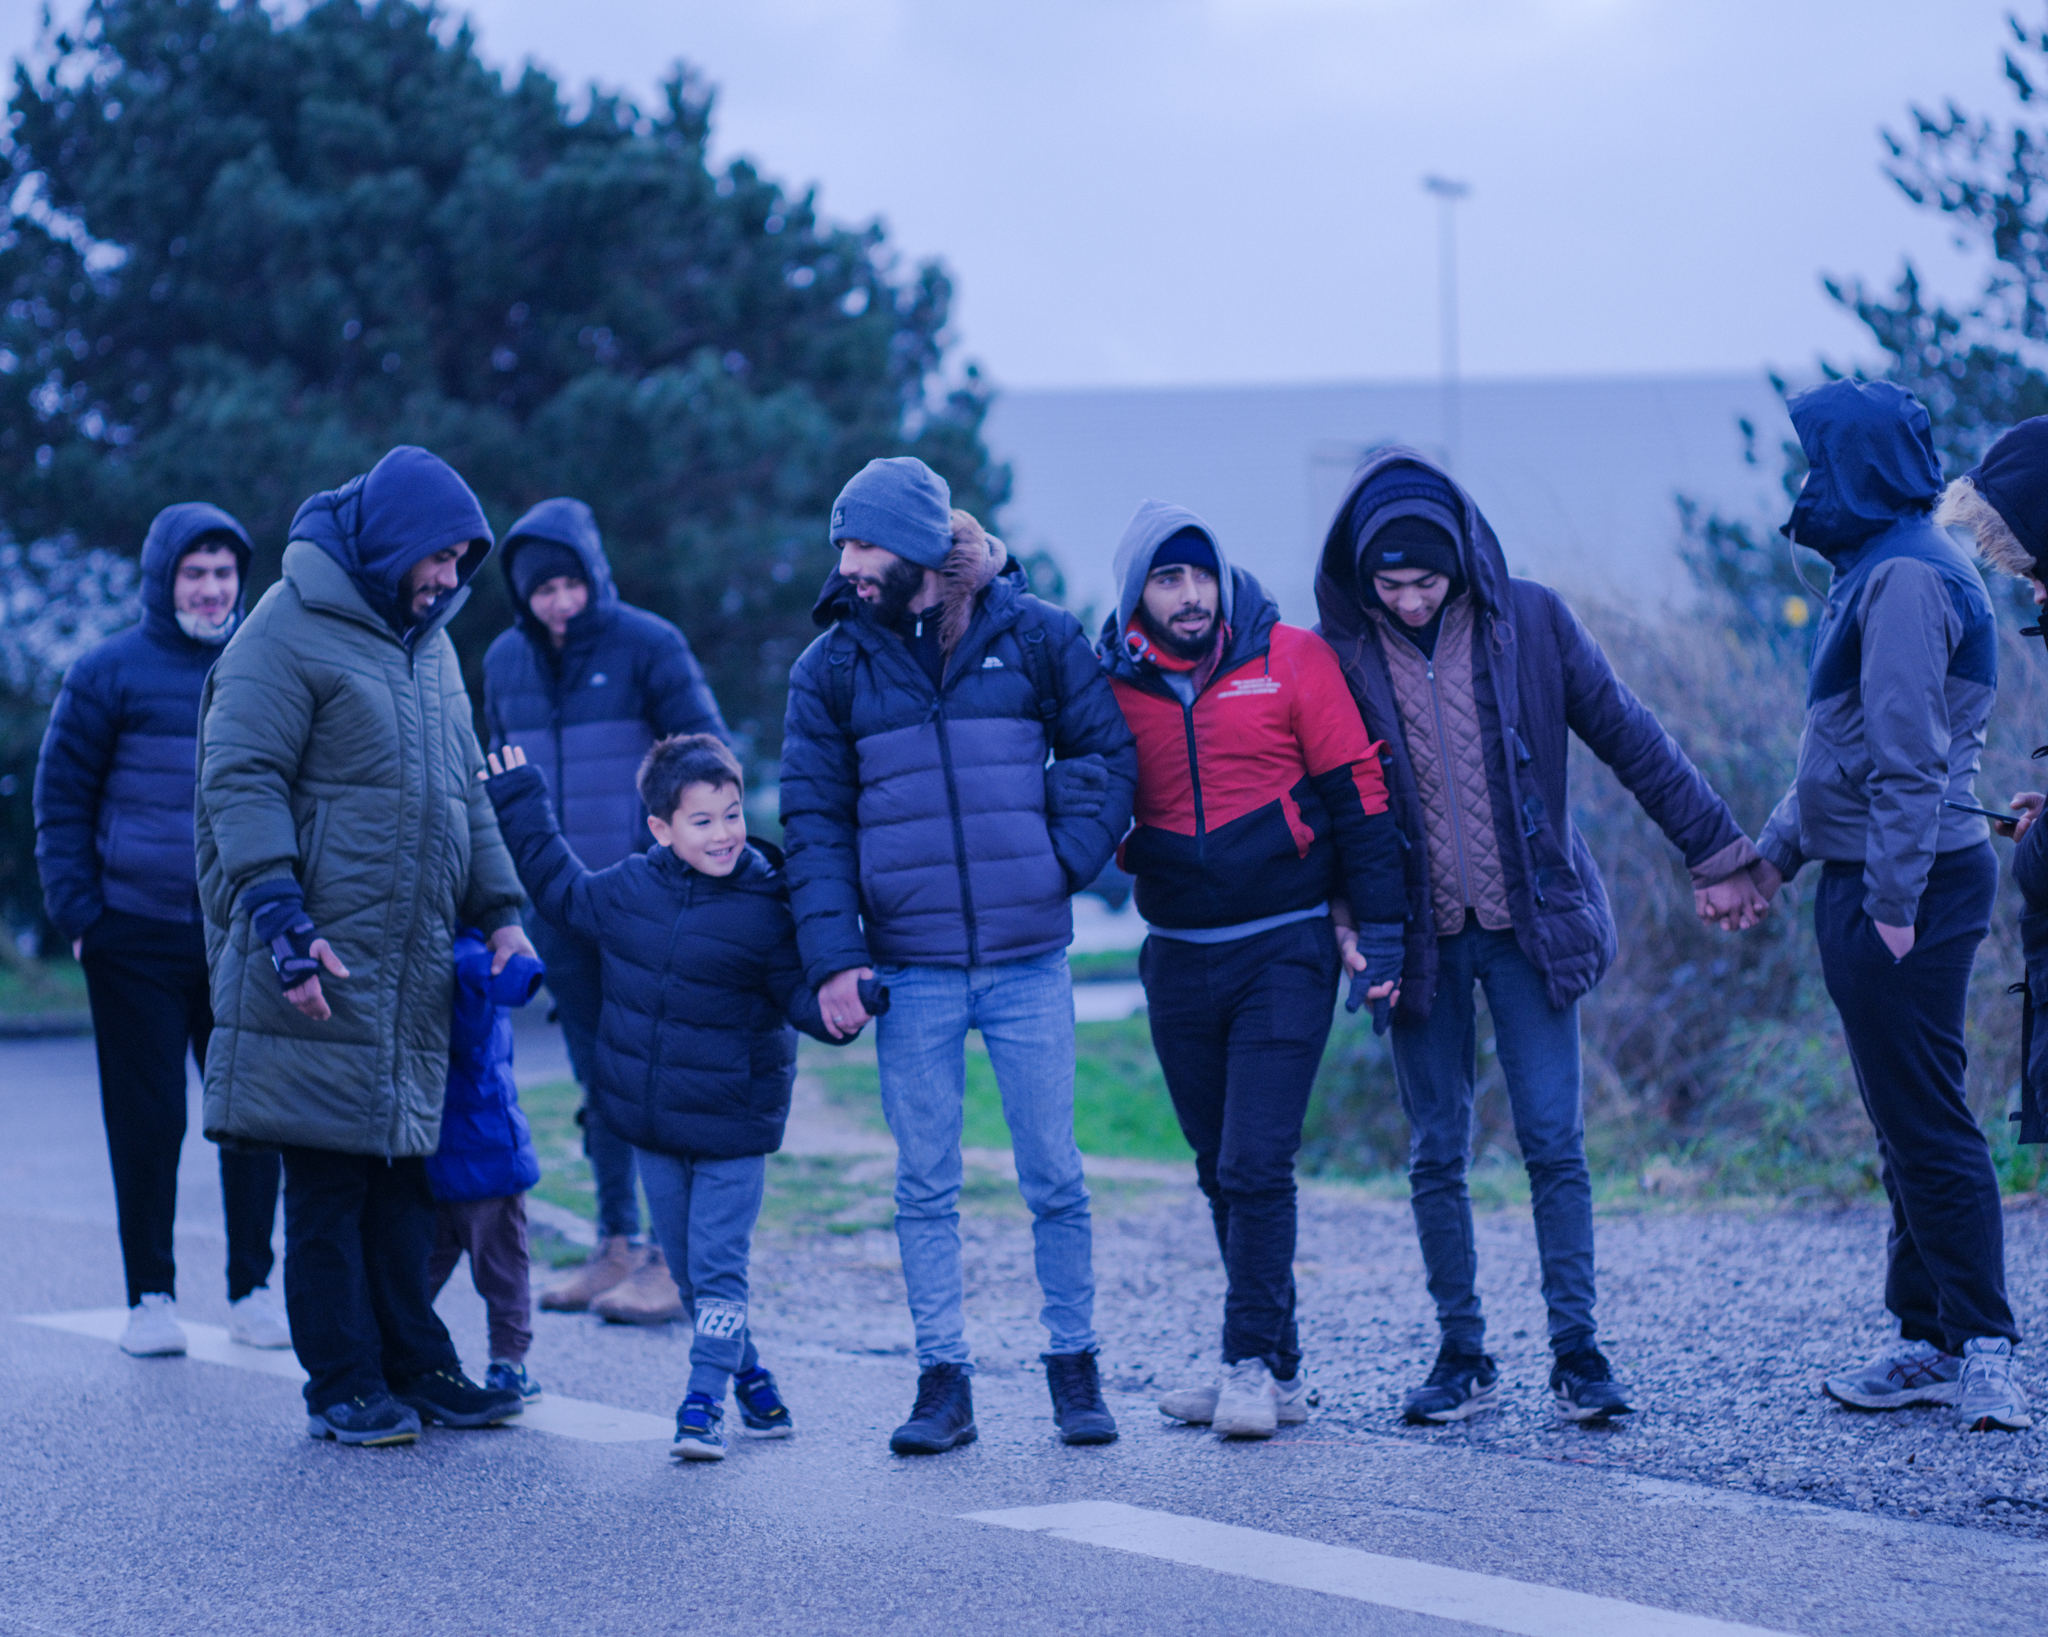 0SSA0097 シリア人移民との思い出【イギリス取材レポート-7】 シリア人移民との思い出【イギリス取材レポート-7】